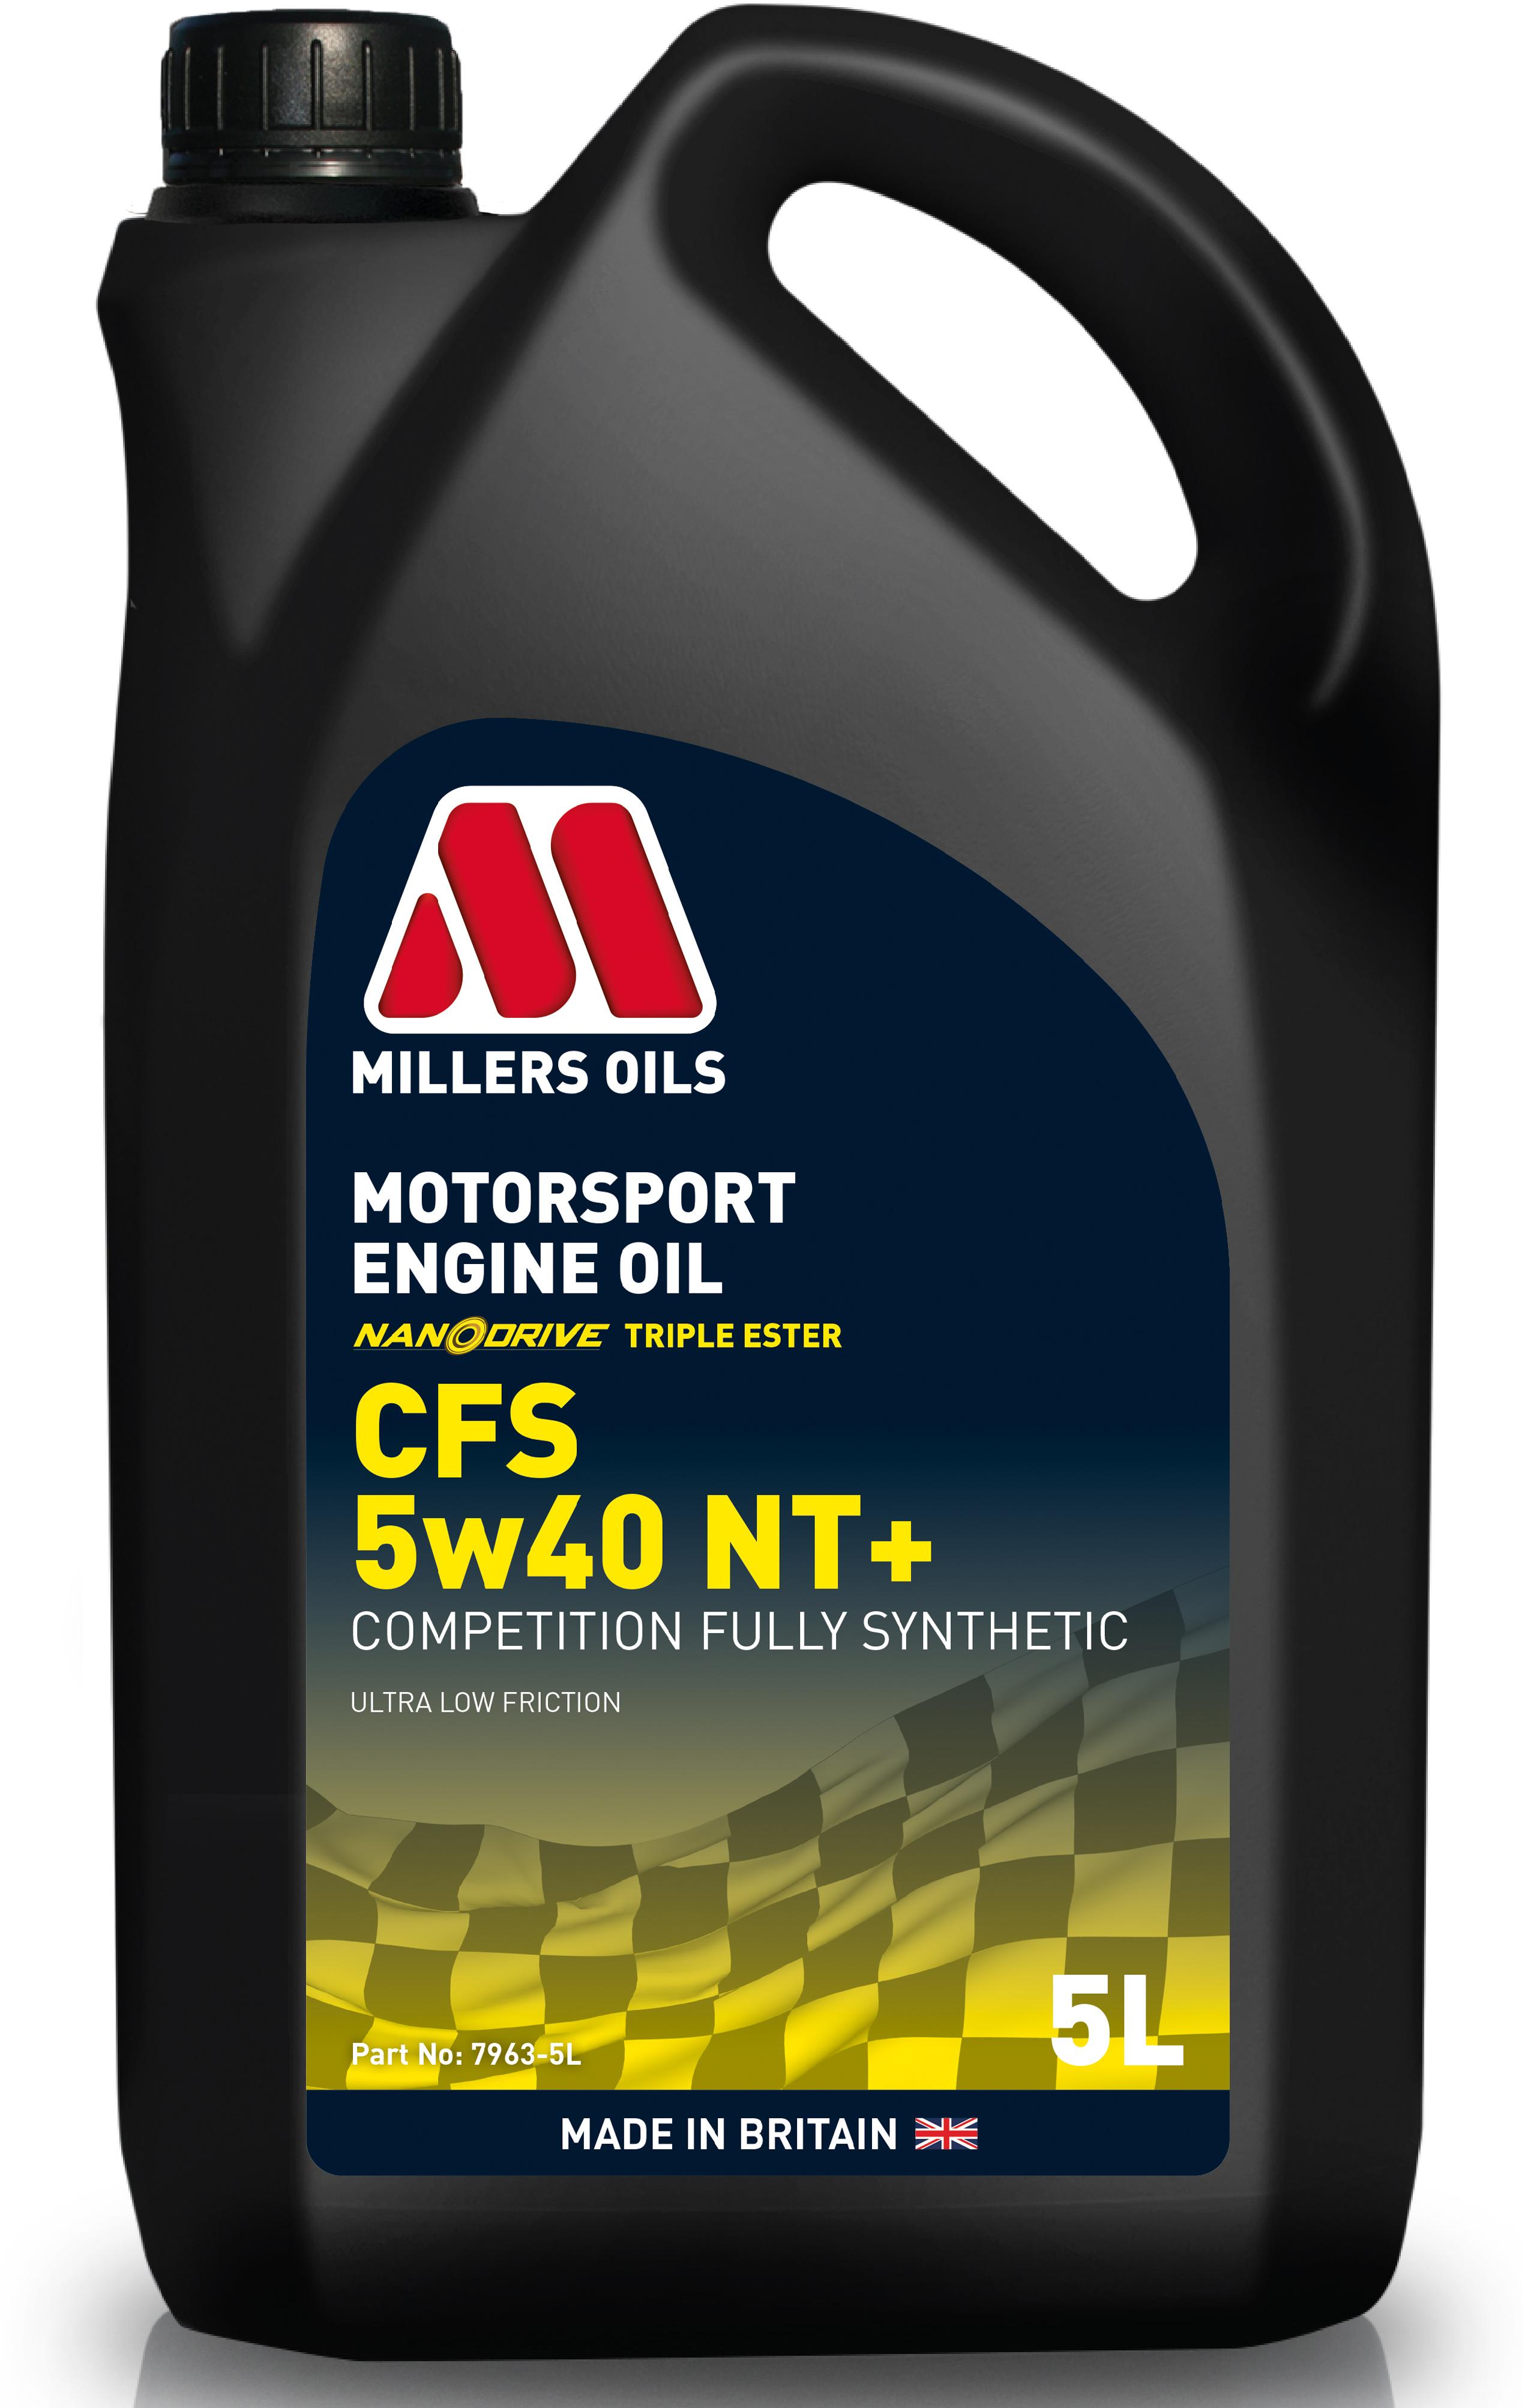 Millers Oils Cfs 5W40 Nt+ Motorsport Engine Oil - 5L